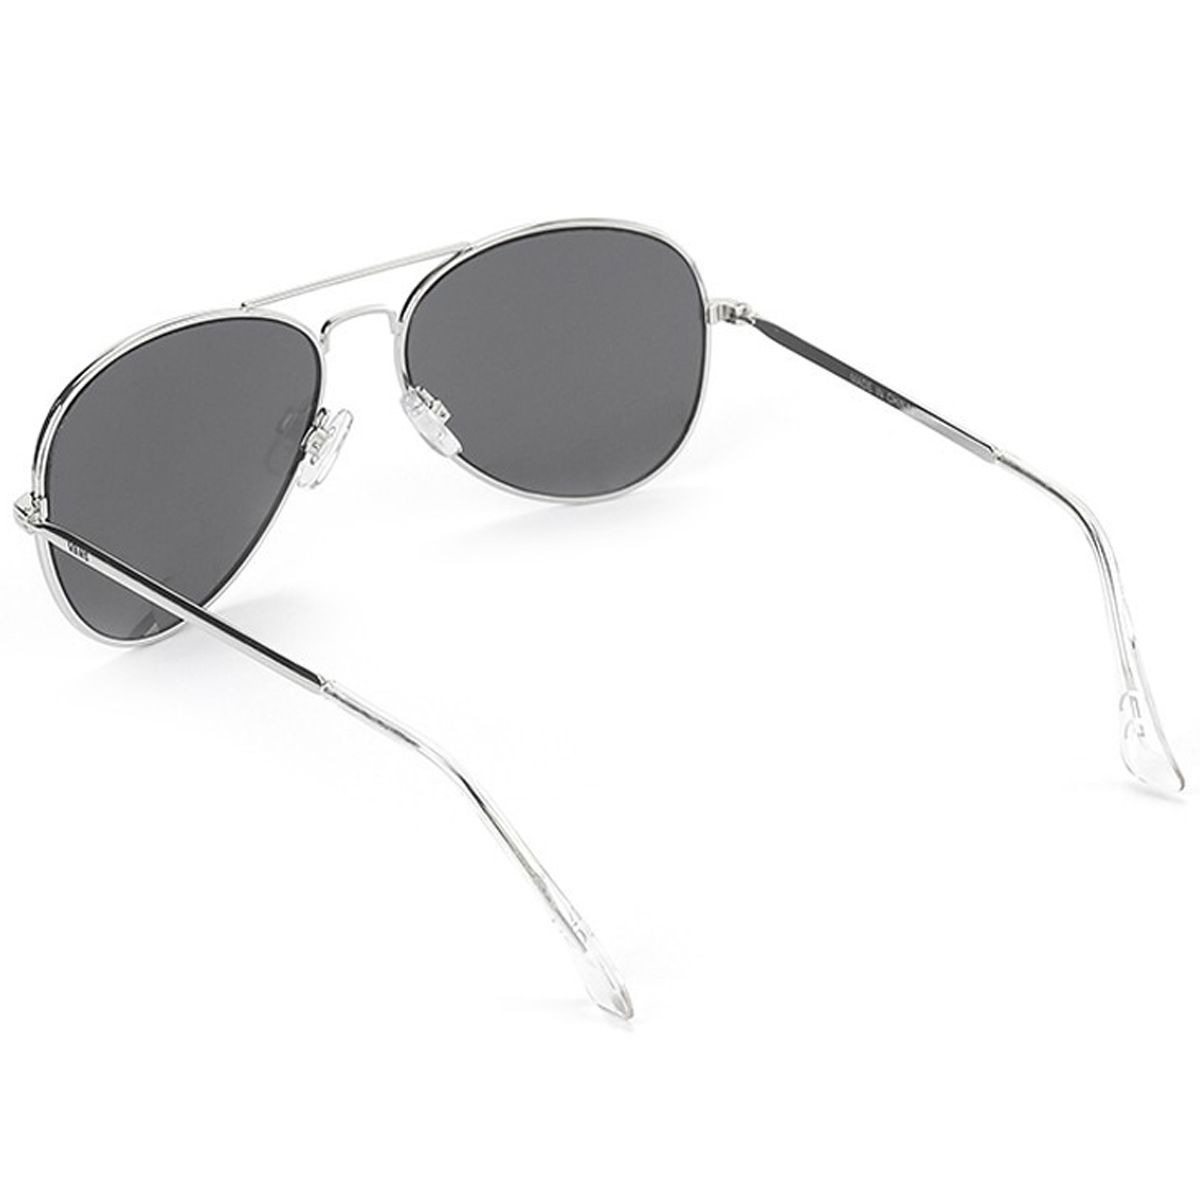 Henderson Sunglasses II Vans - Silver Shades